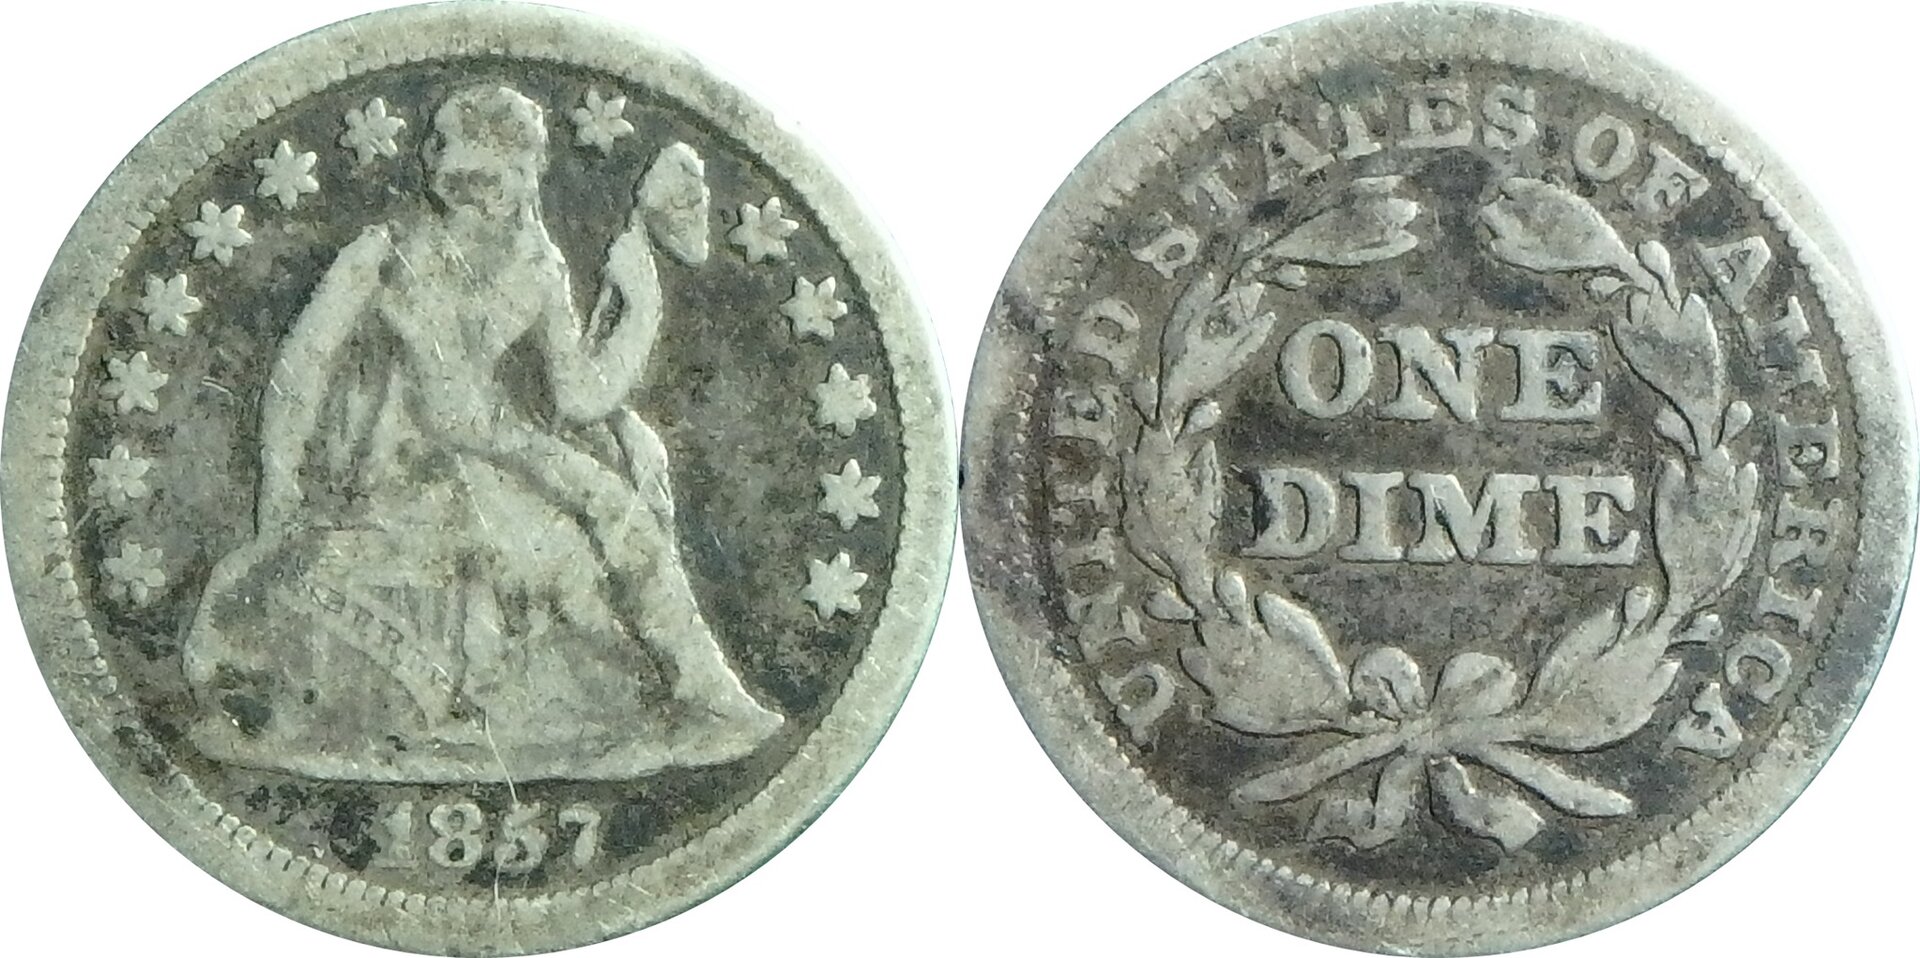 1857 P US 10 c.jpg